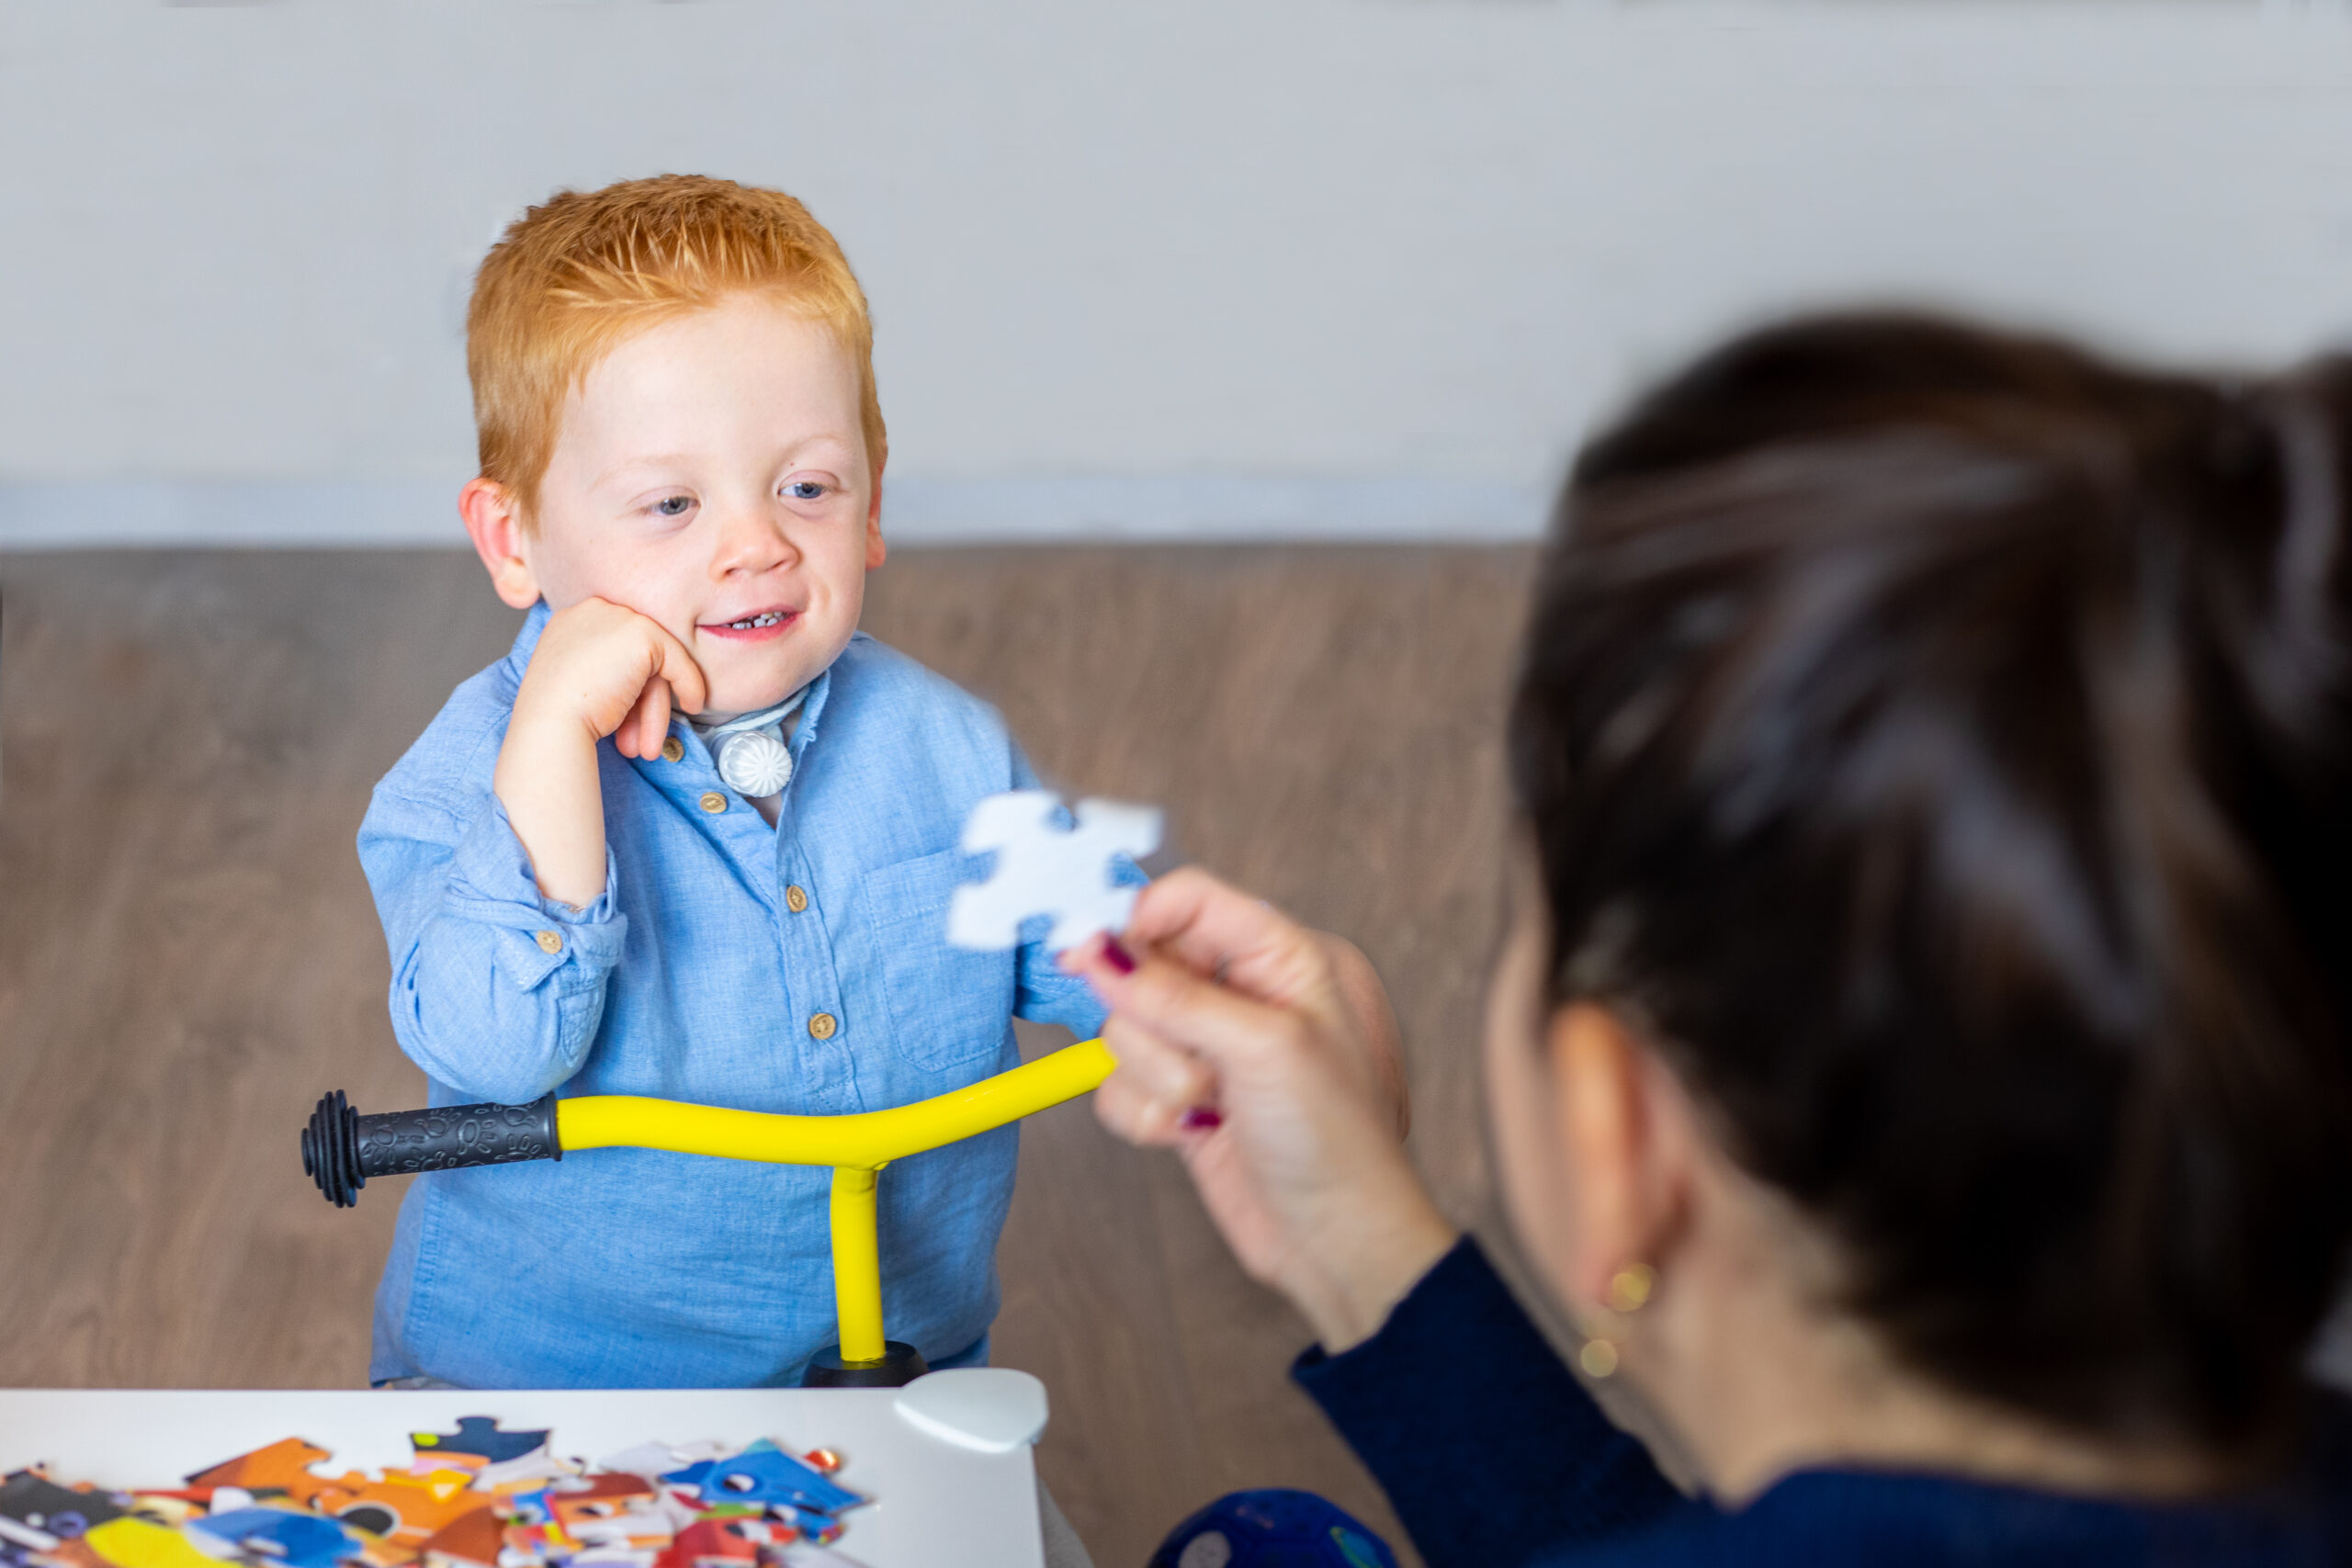 pediatric-tracheostomy-child-plays-with-puzzles